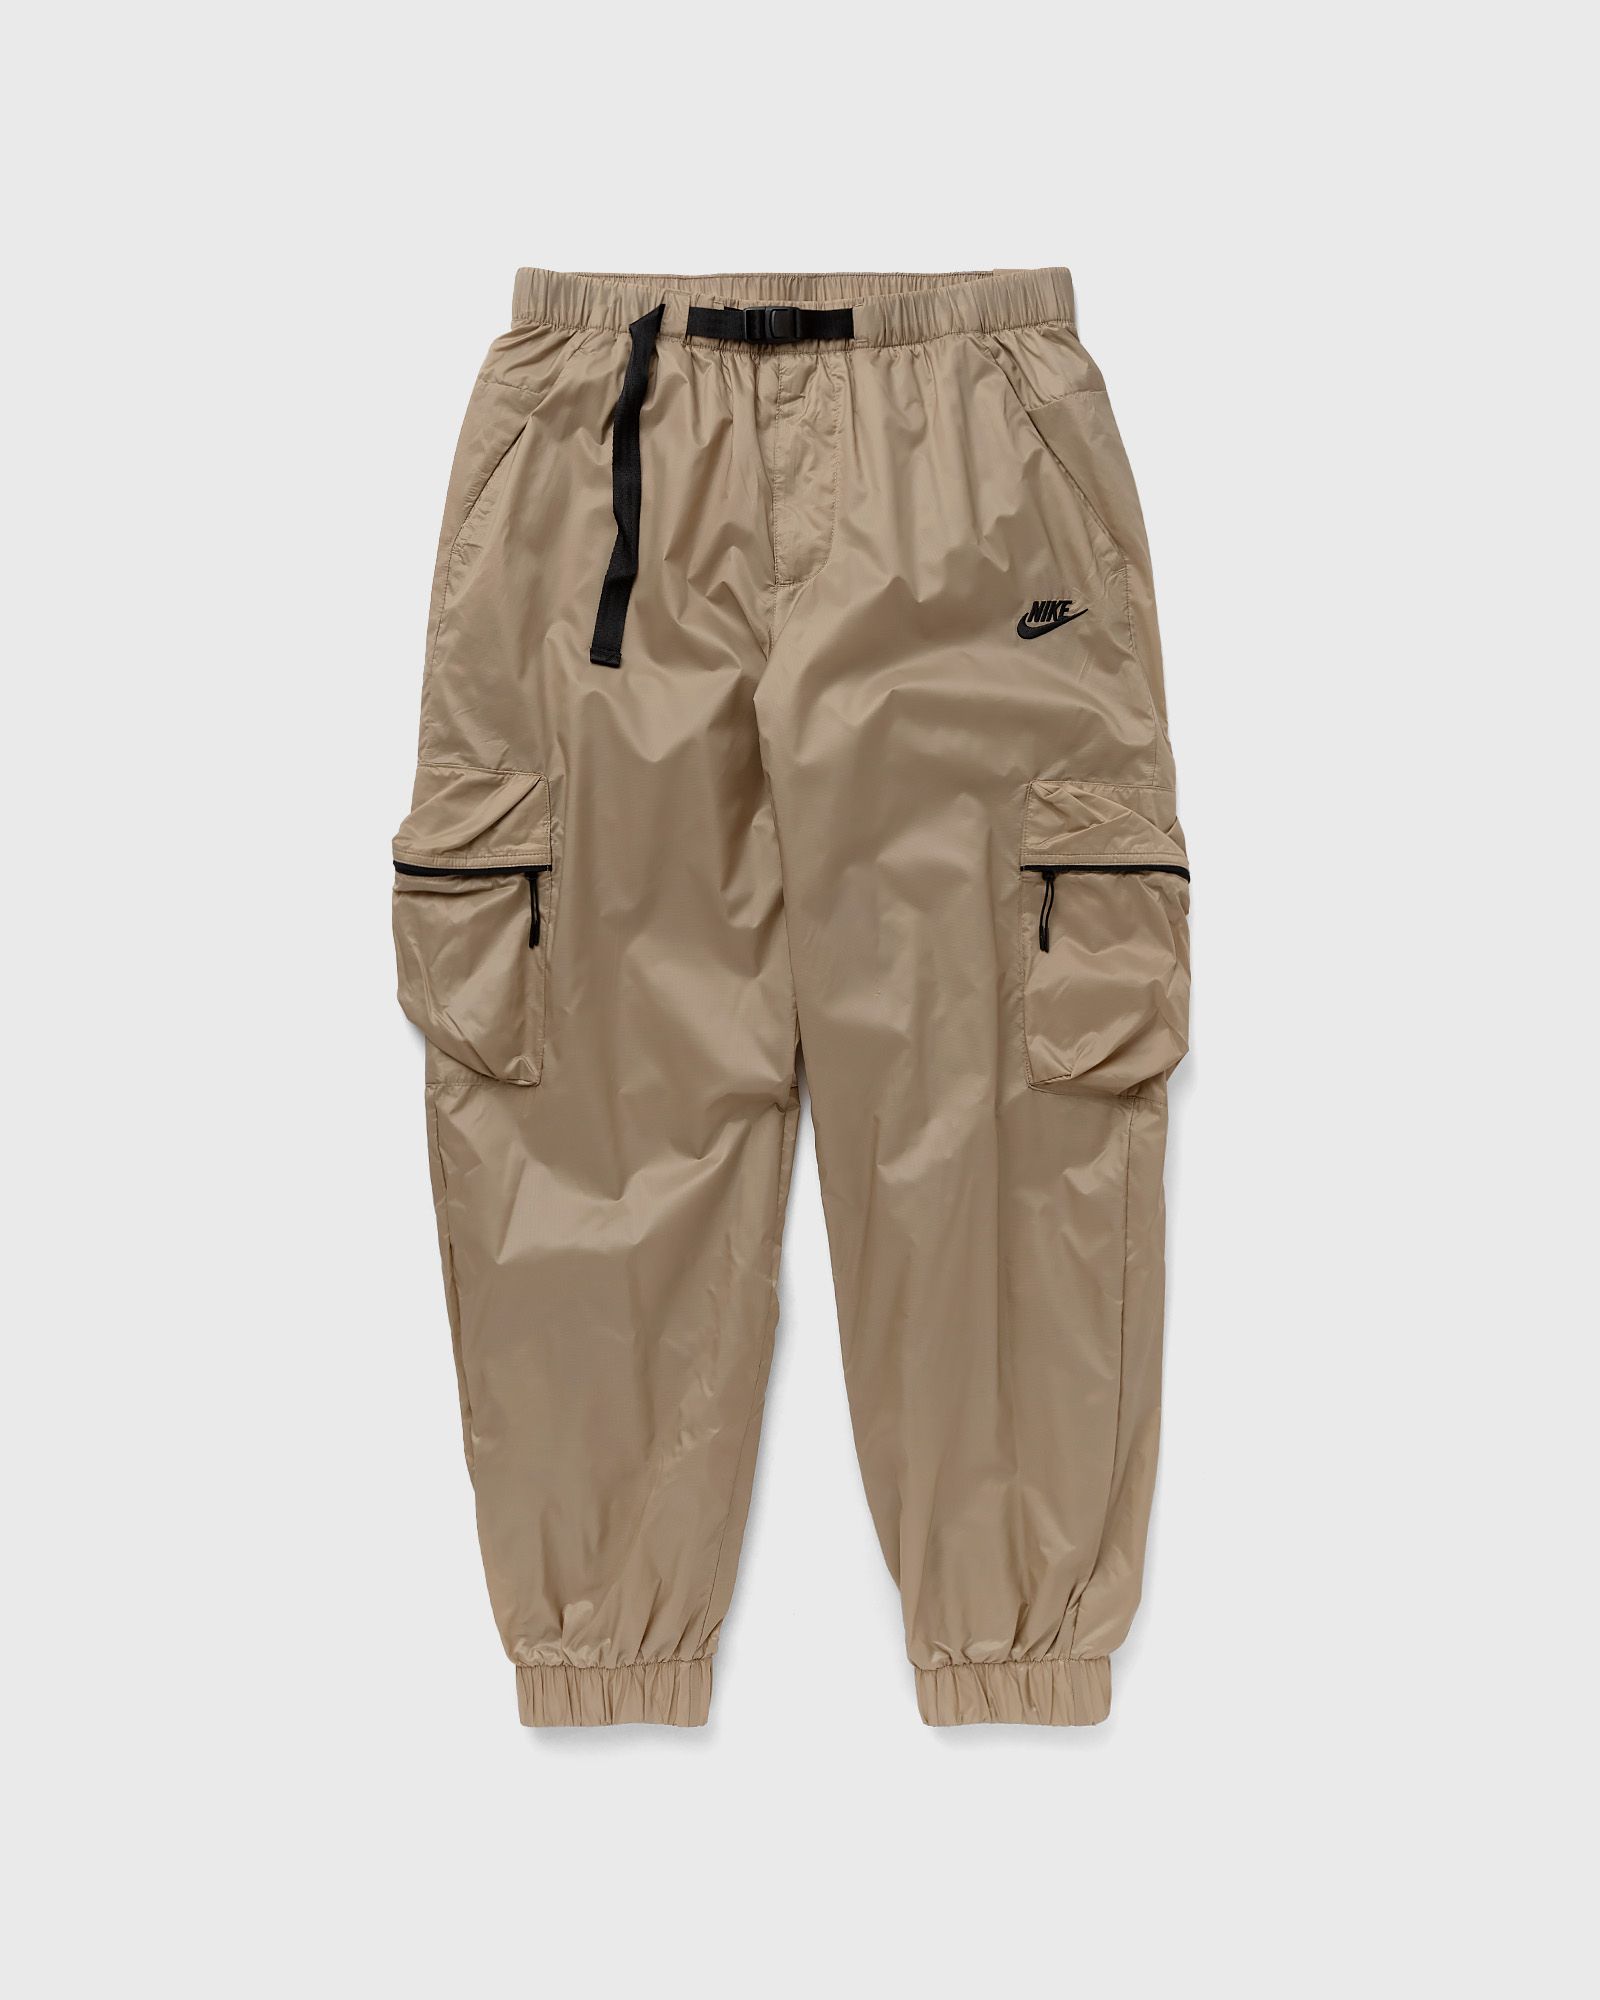 Nike - tech lined woven pant men cargo pants brown in größe:xl